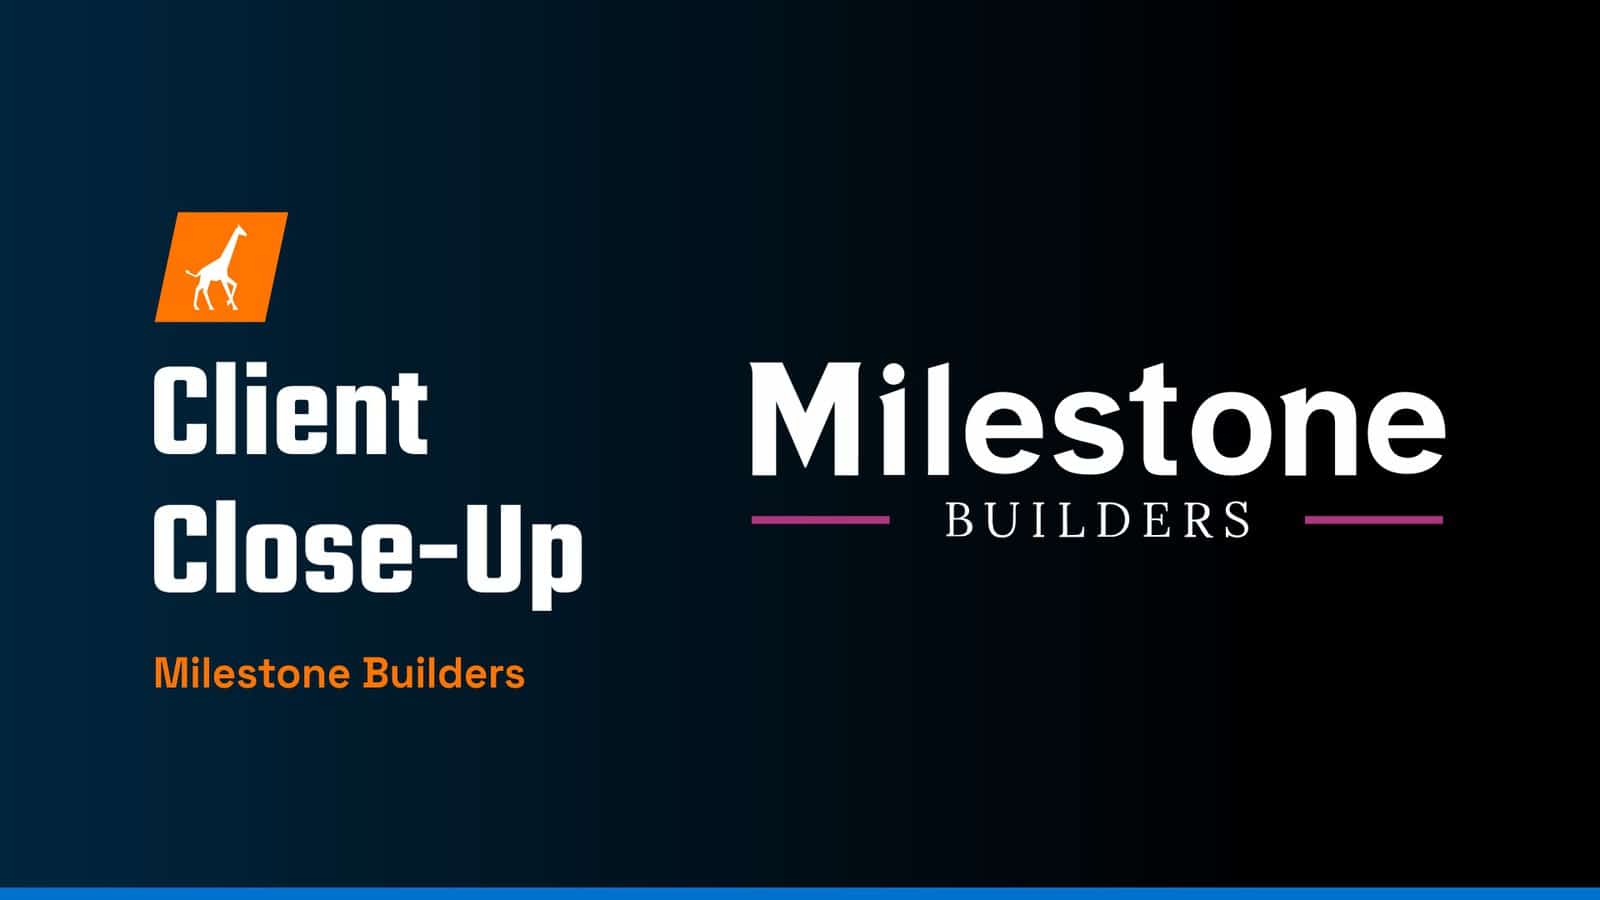 client close up milestone builders